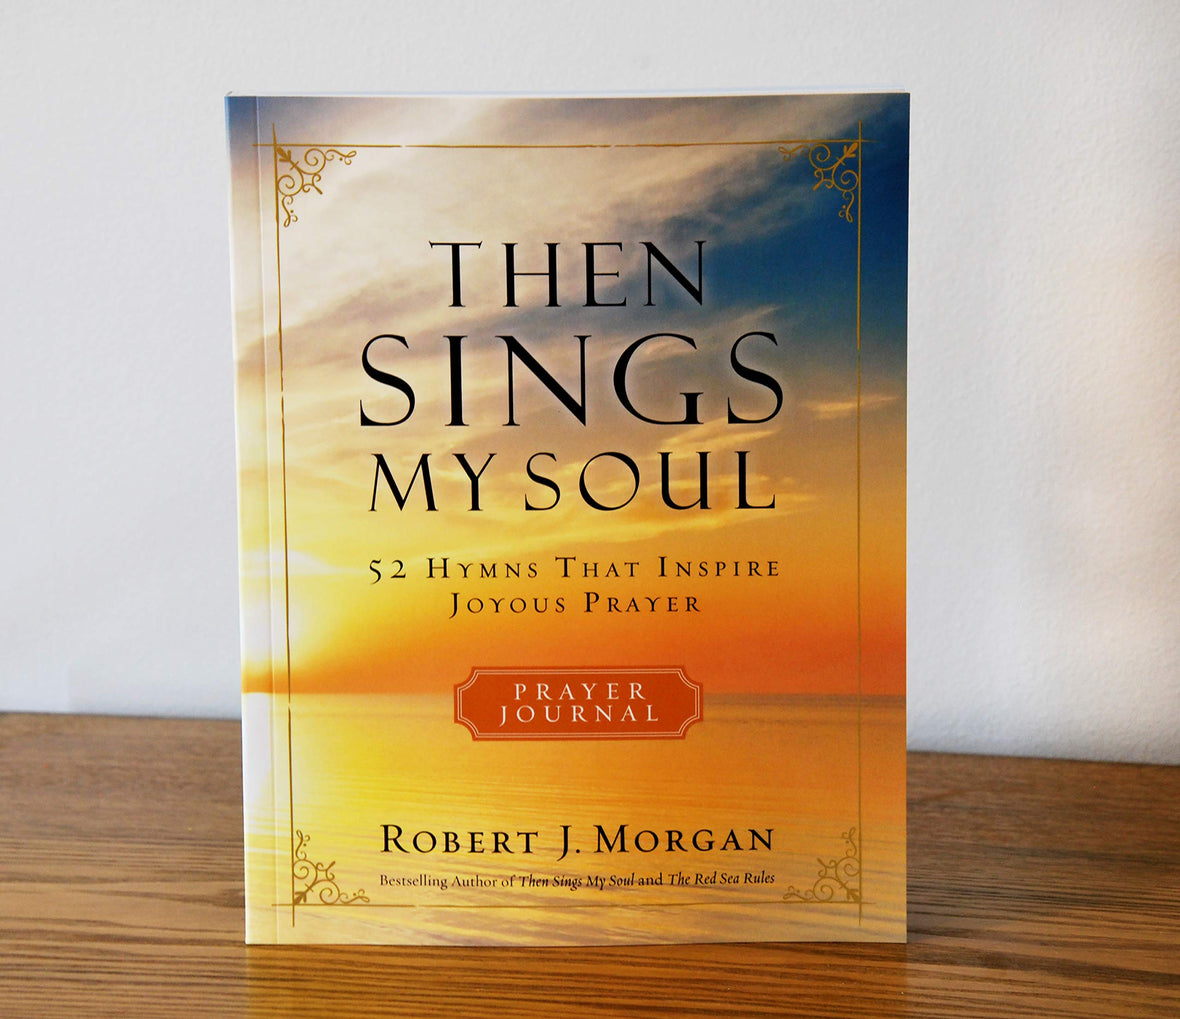 Then Sings My Soul Prayer Journal: 52 Hymns that Inspire Joyous Prayer